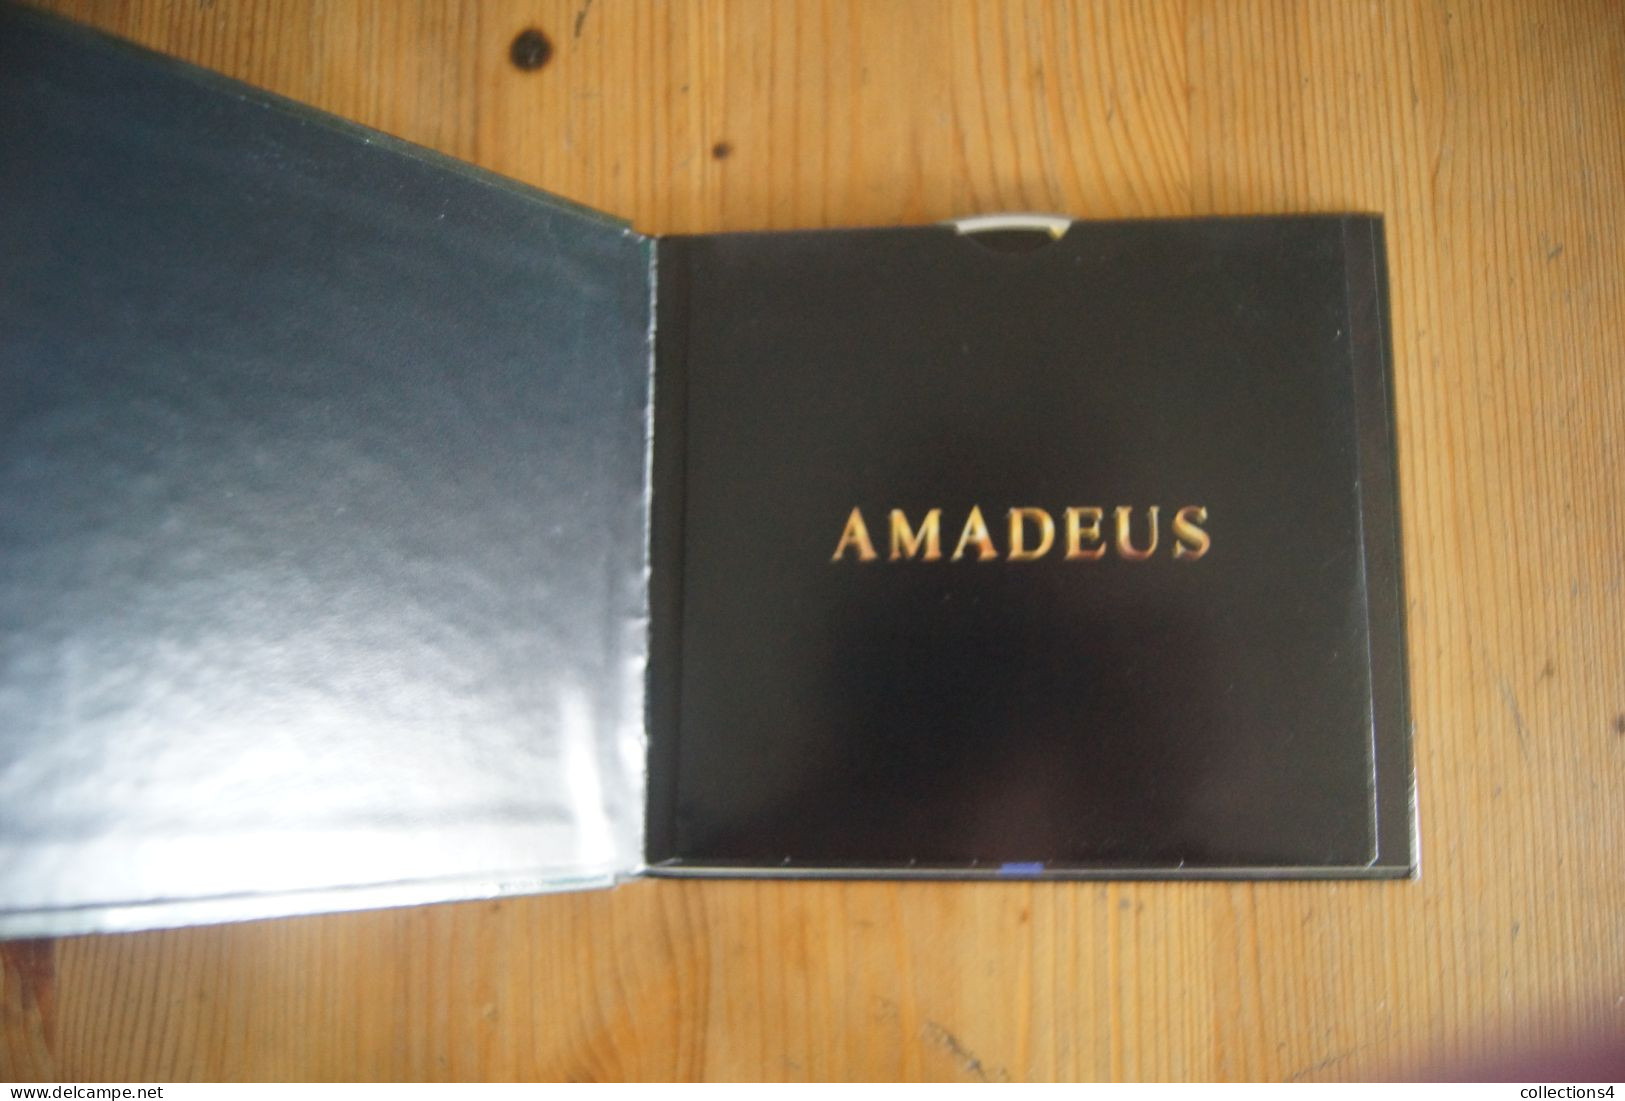 AMADEUS RARE DOUBLE CD LIVRE DU FILM DE MILOS FORMAN NEVILLE MARRINER VALEUR+ 1998 - Filmmusik